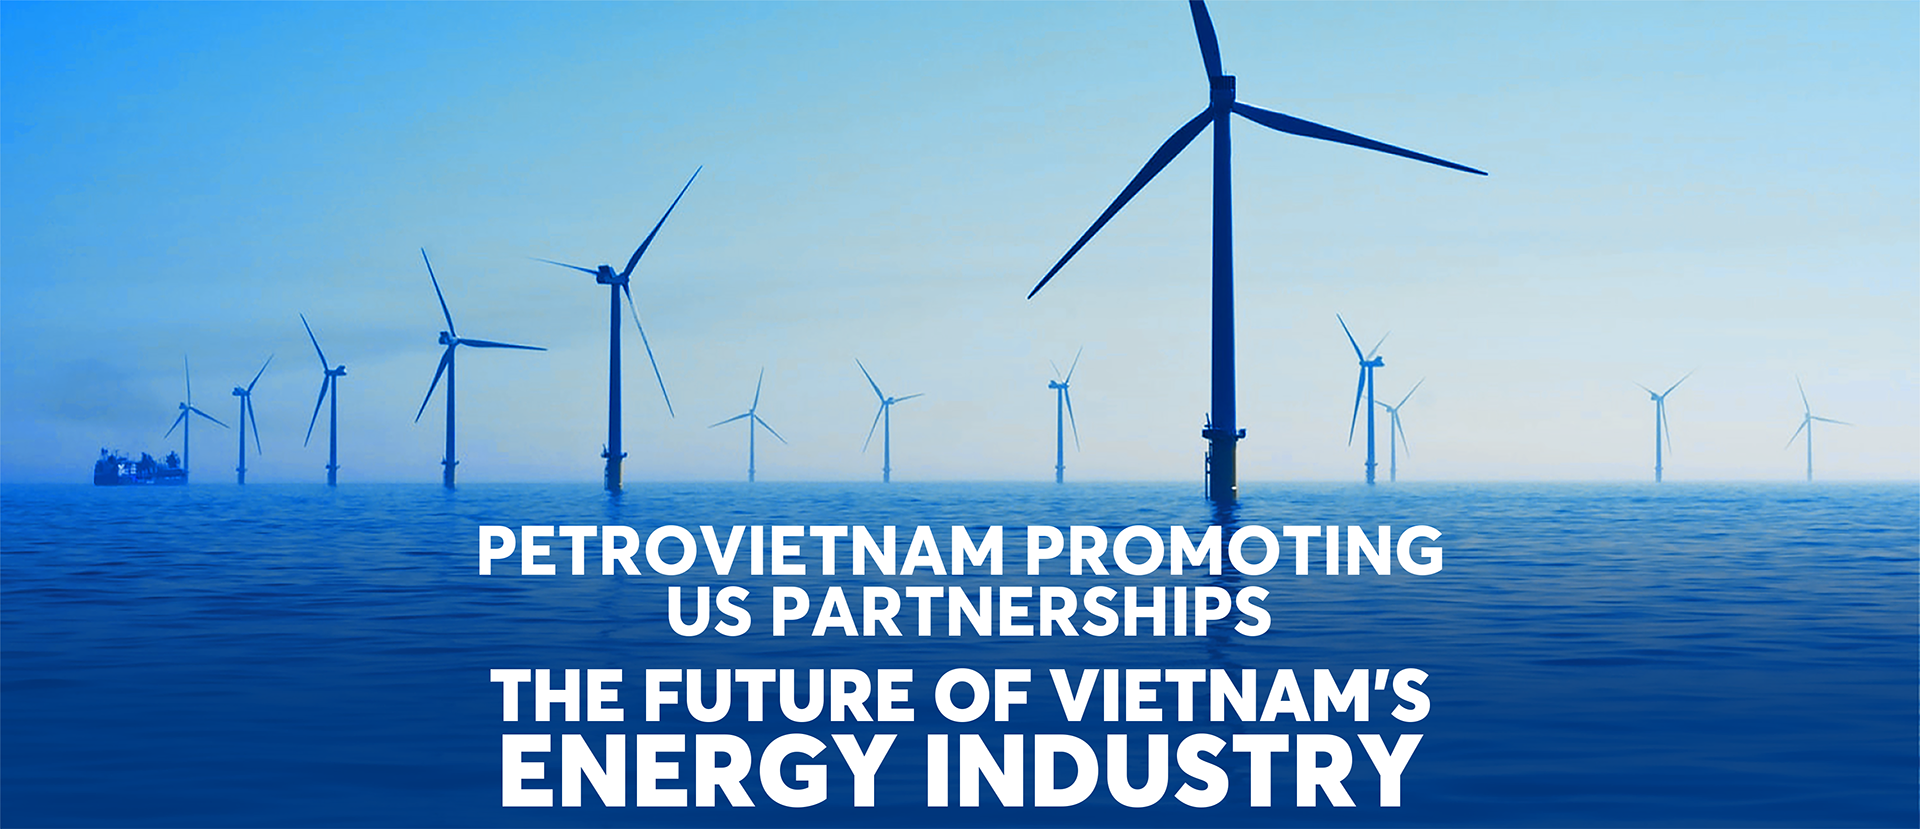 PetroVietnam promoting US partnerships: The future of Vietnam’s energy industry